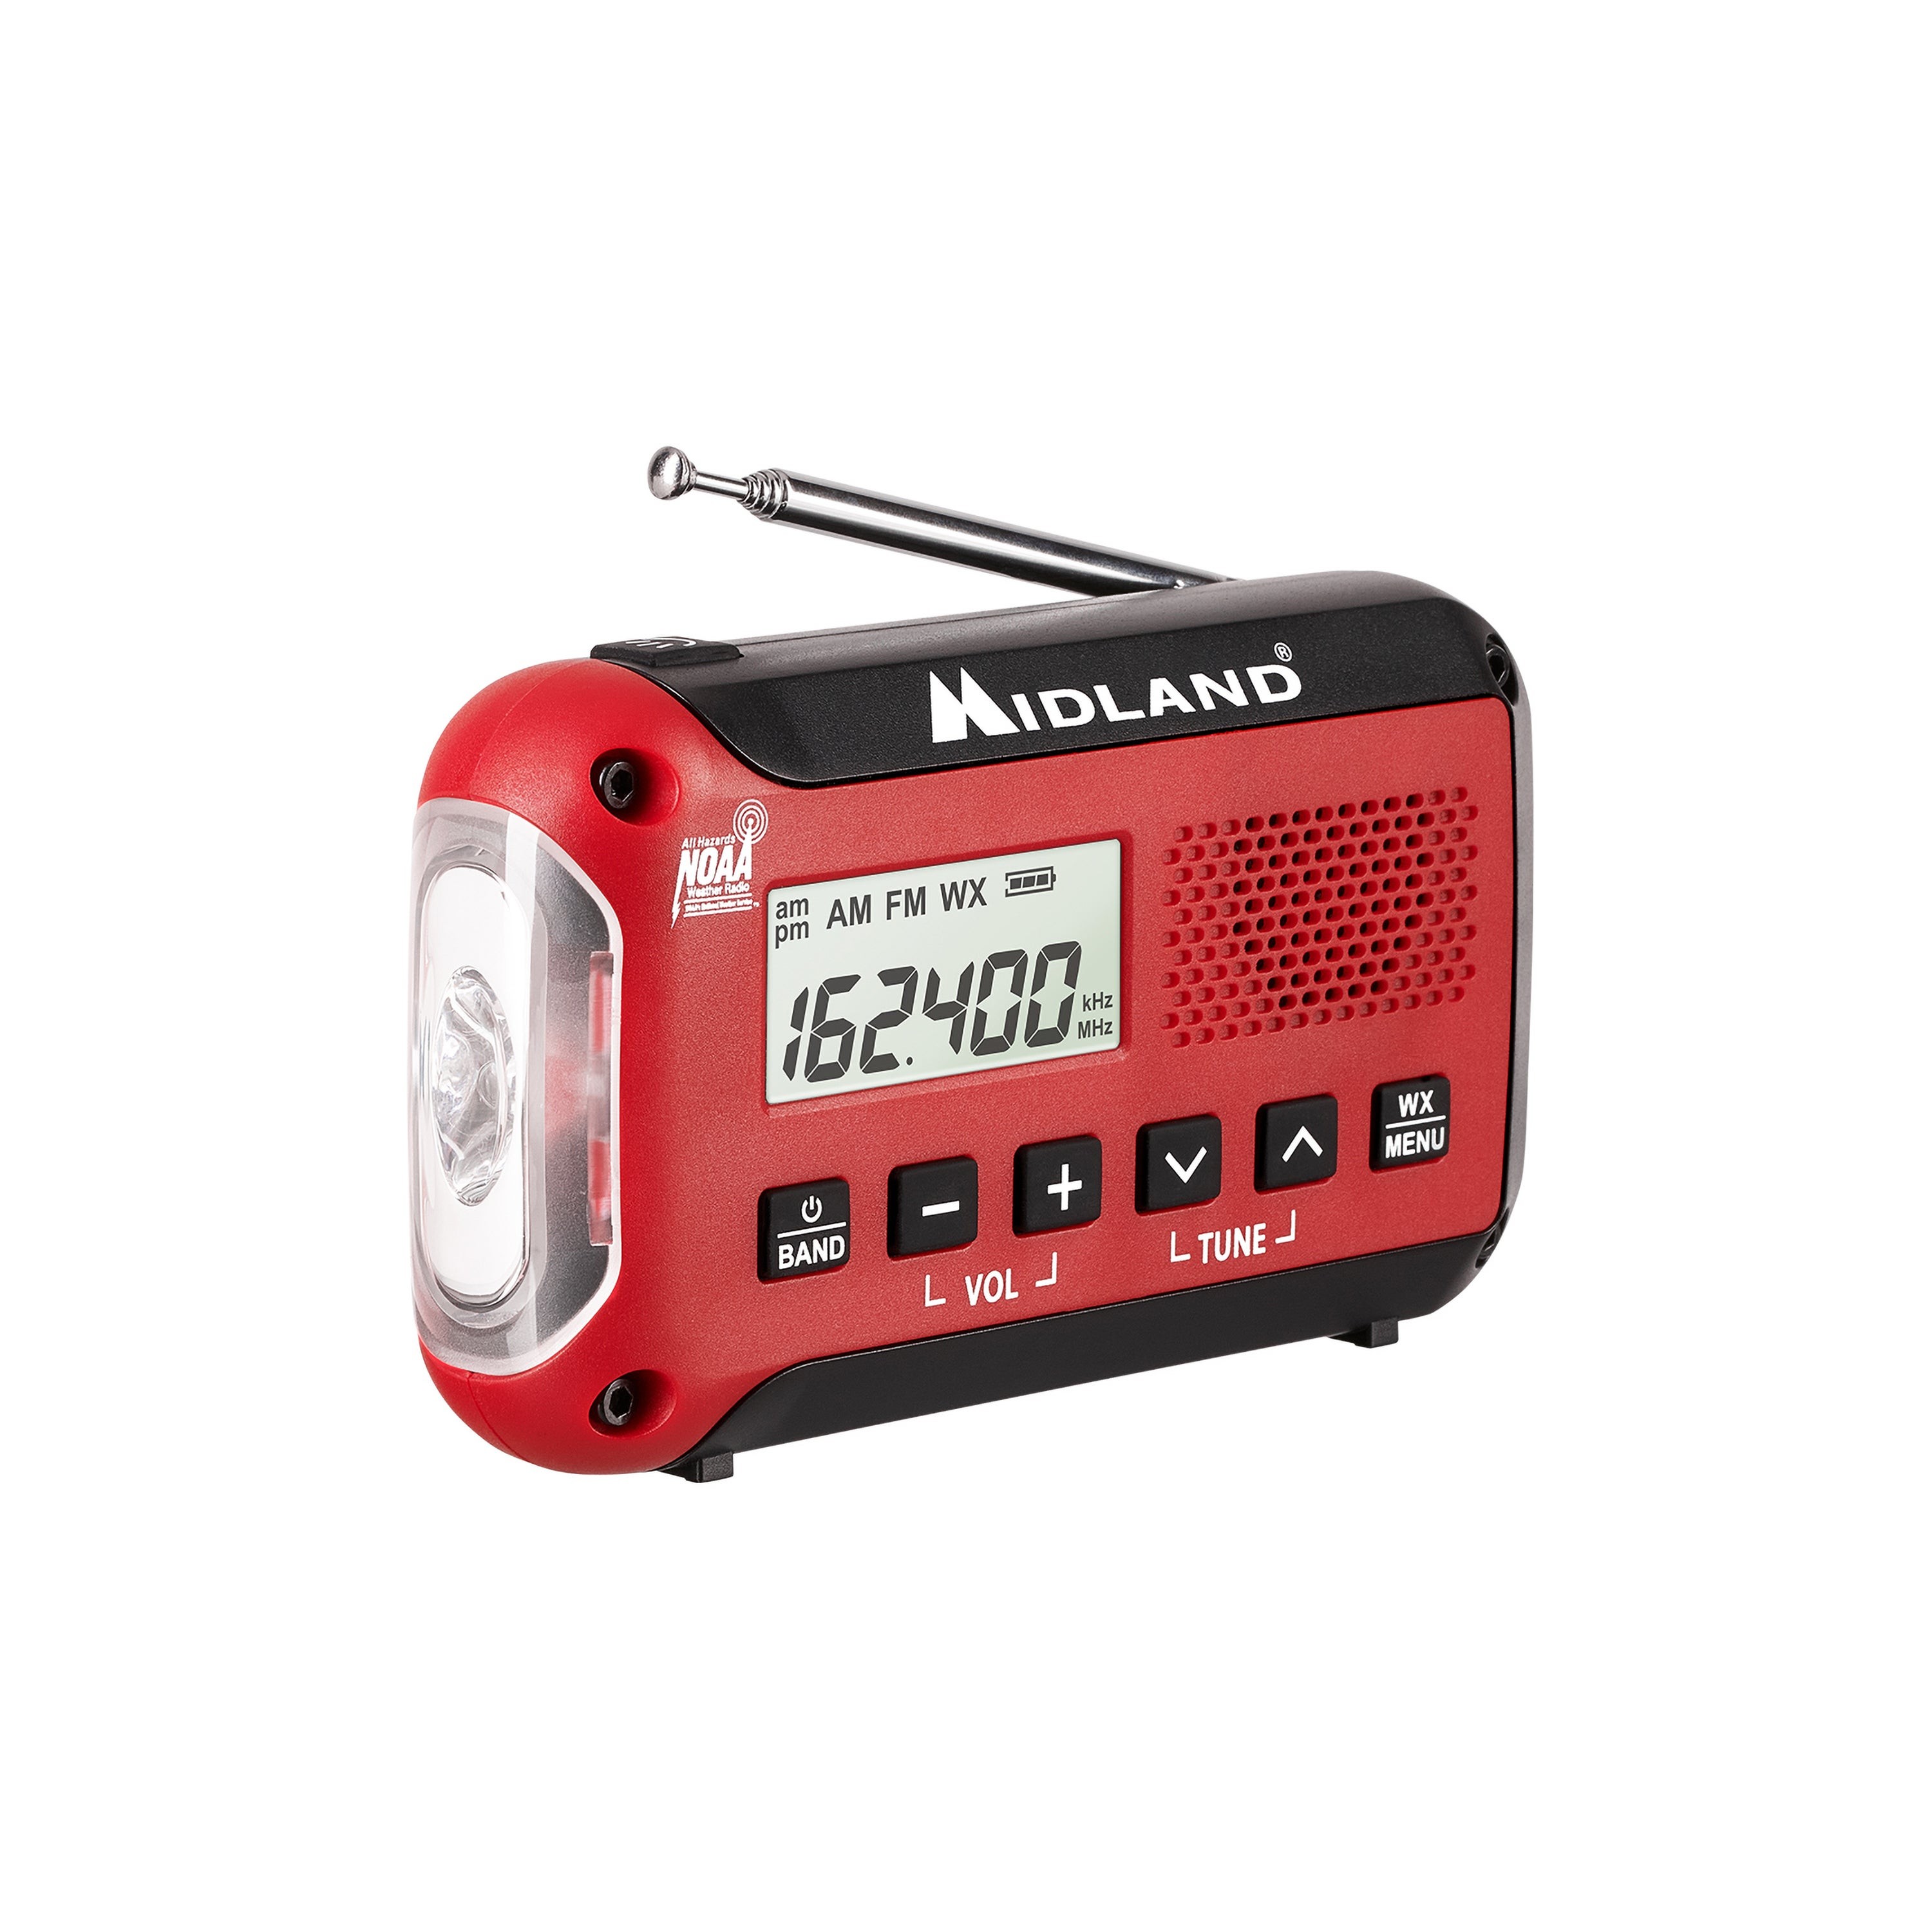 E+Ready Compact Emergency Alert Weather Radio w/ Batteries